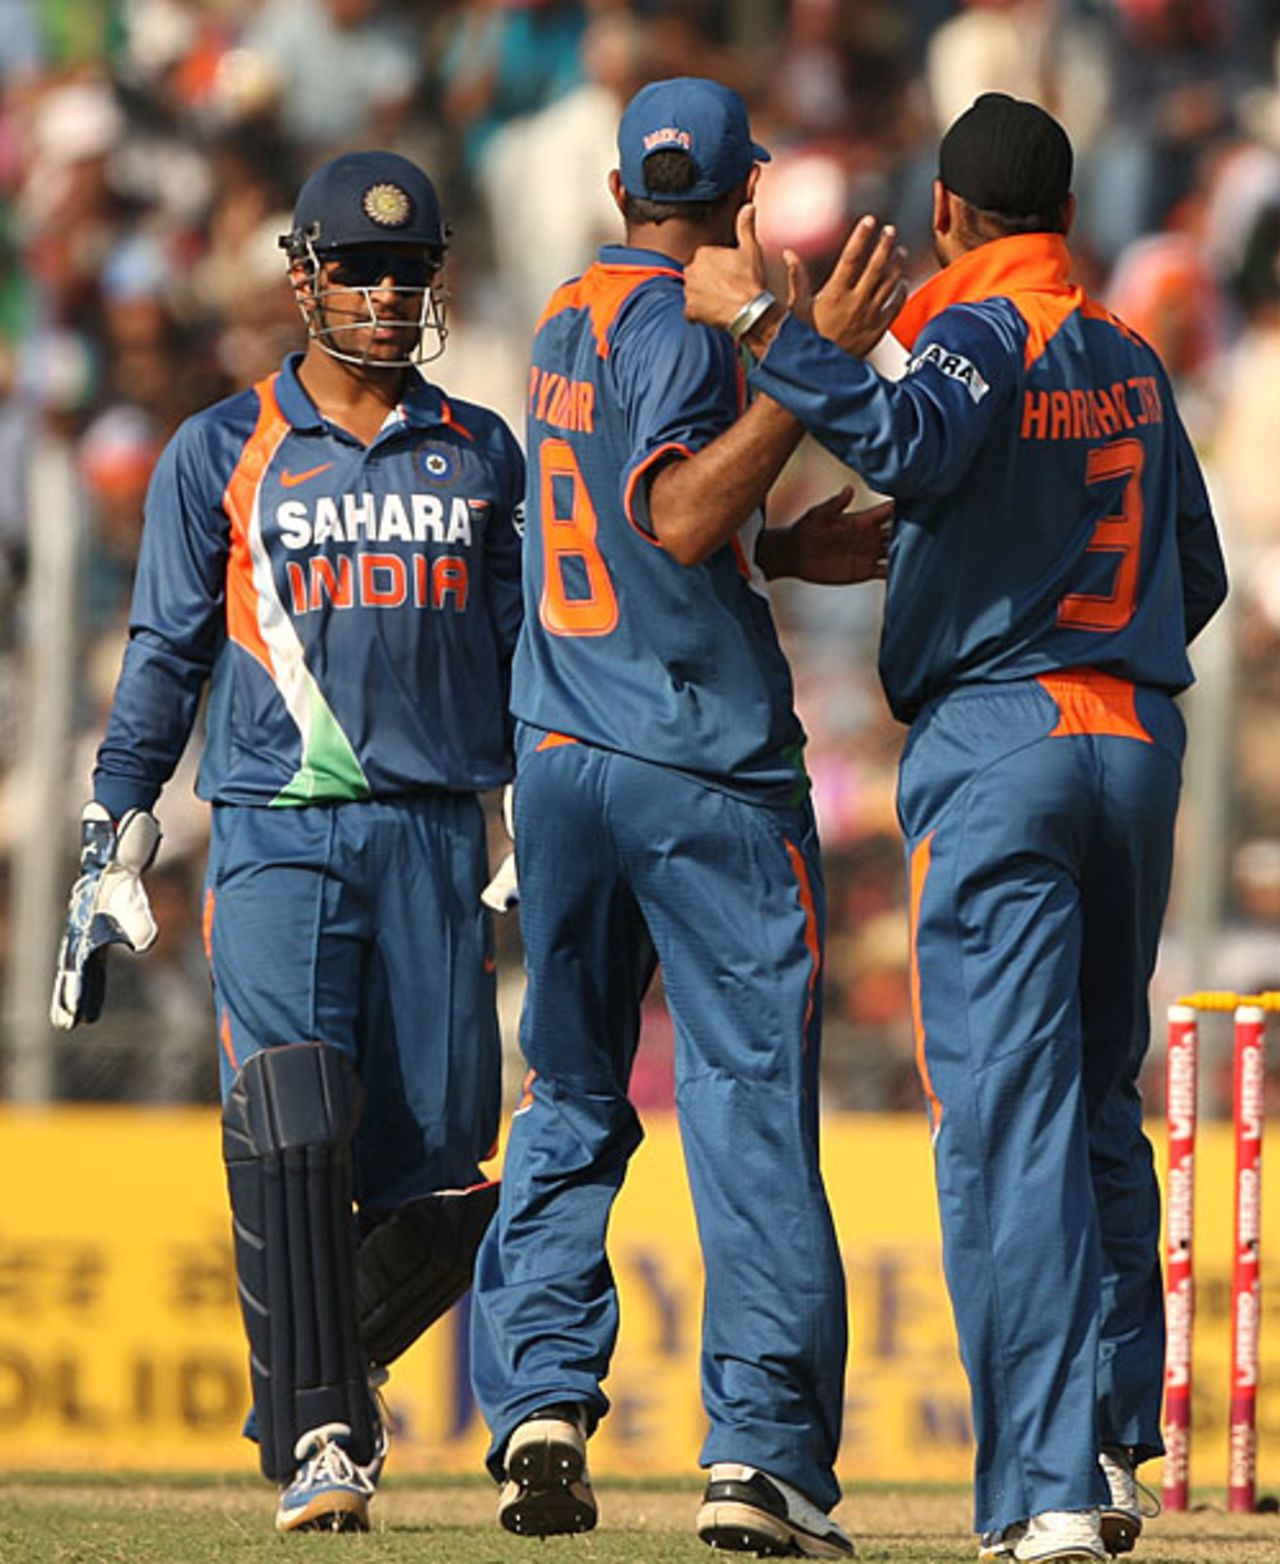 Harbhajan Singh gets the congratulations after dismissing Ricky Ponting, India v Australia, 6th ODI, Guwahati, November 8, 2009